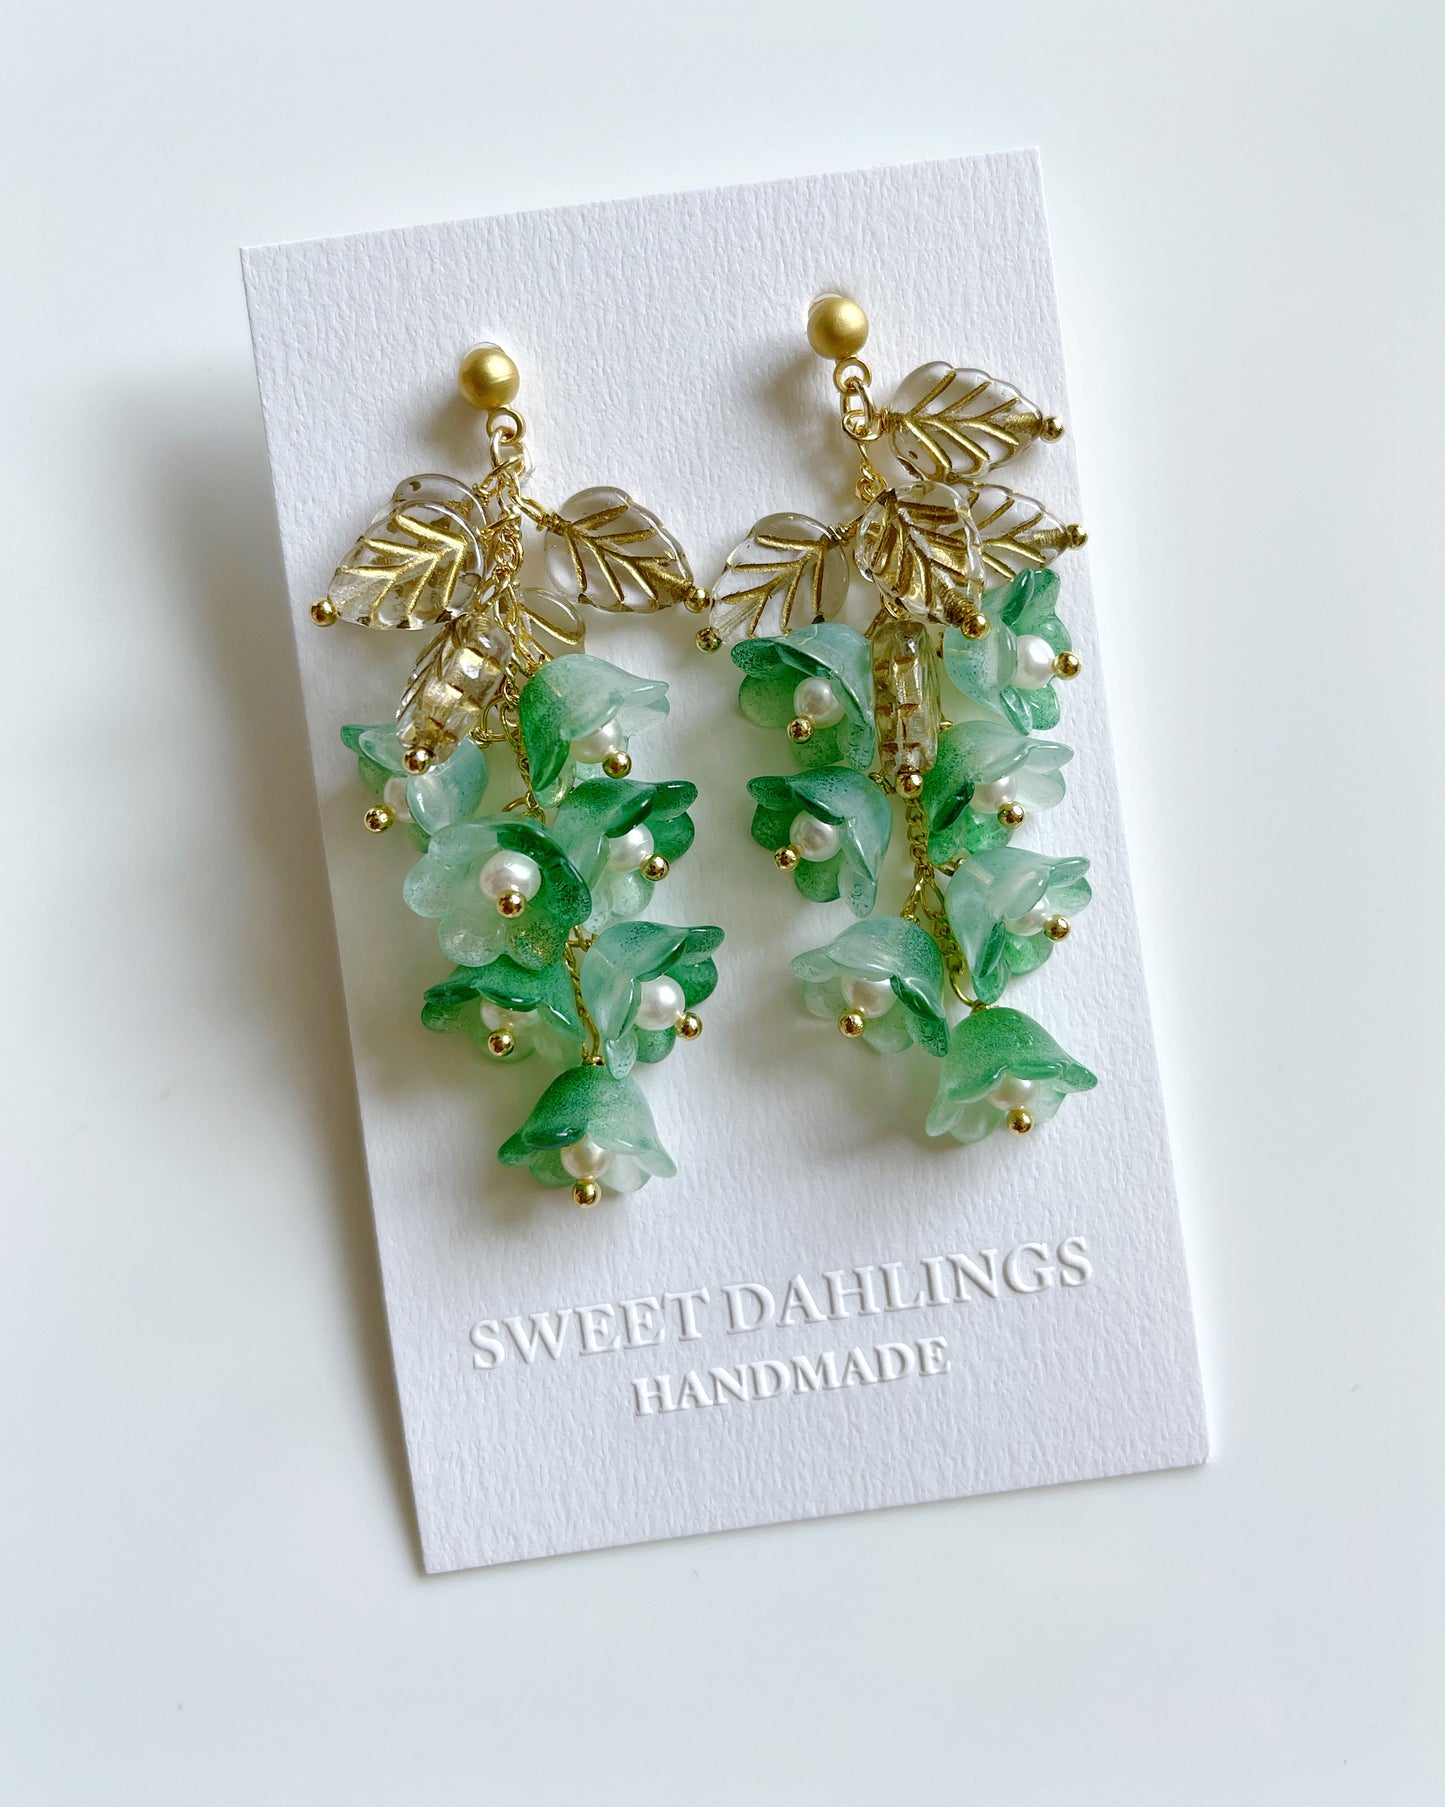 Canterbury bell flowers earrings in green